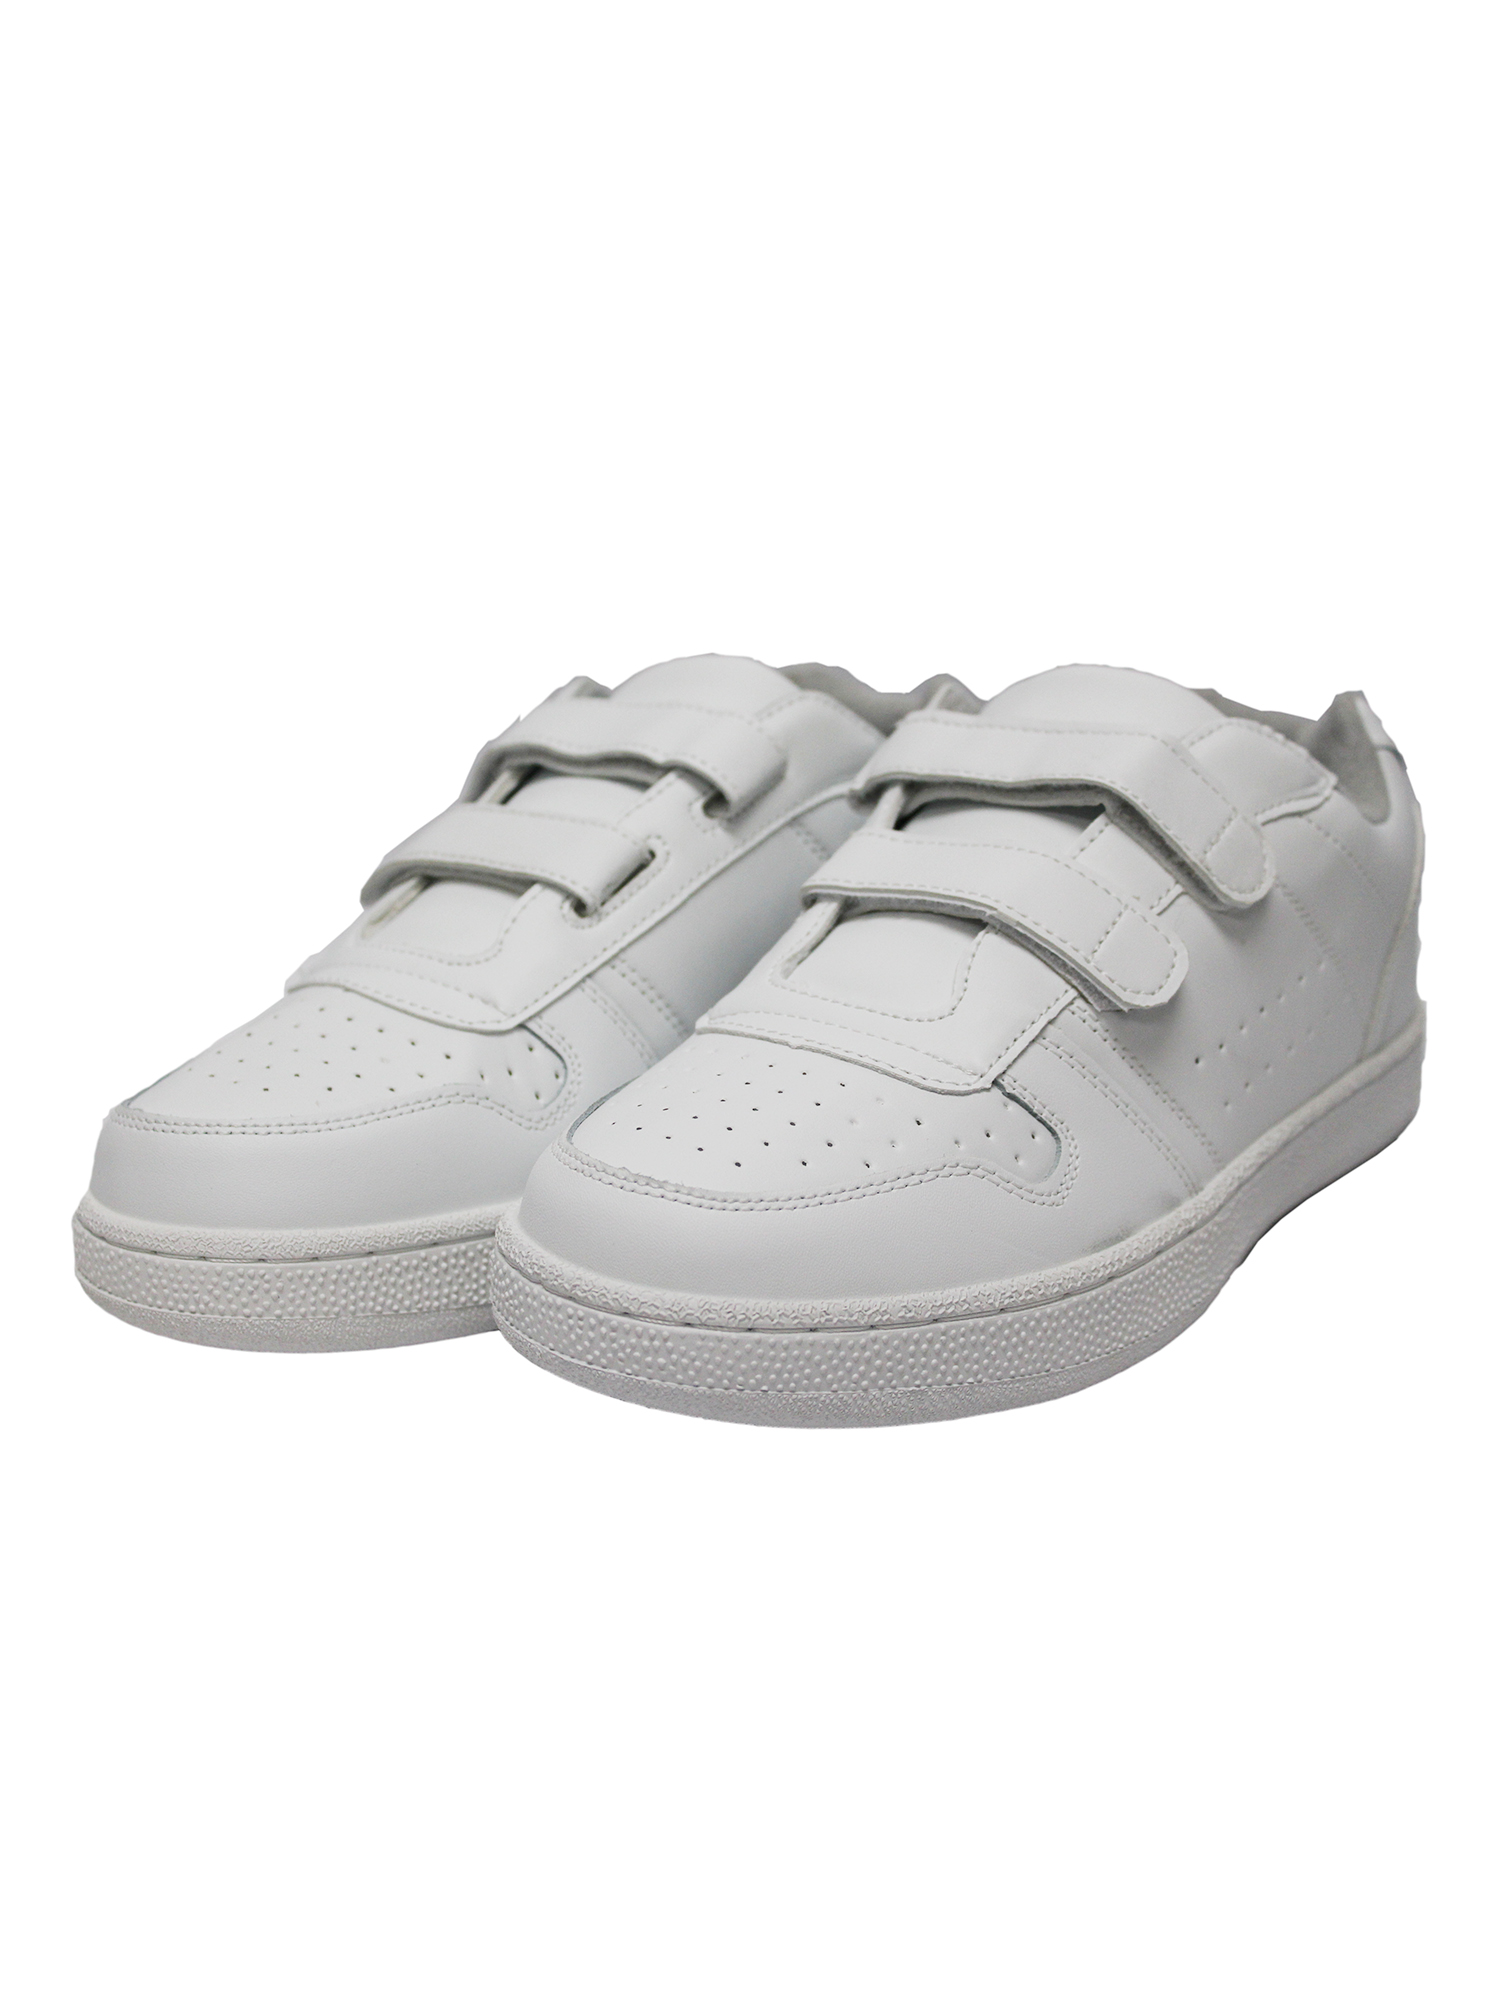 Tanleewa Men's Leather Strap Sneakers Lightweight Hook and Loop Walking Shoe Size 6.5 Adult Male - image 2 of 5